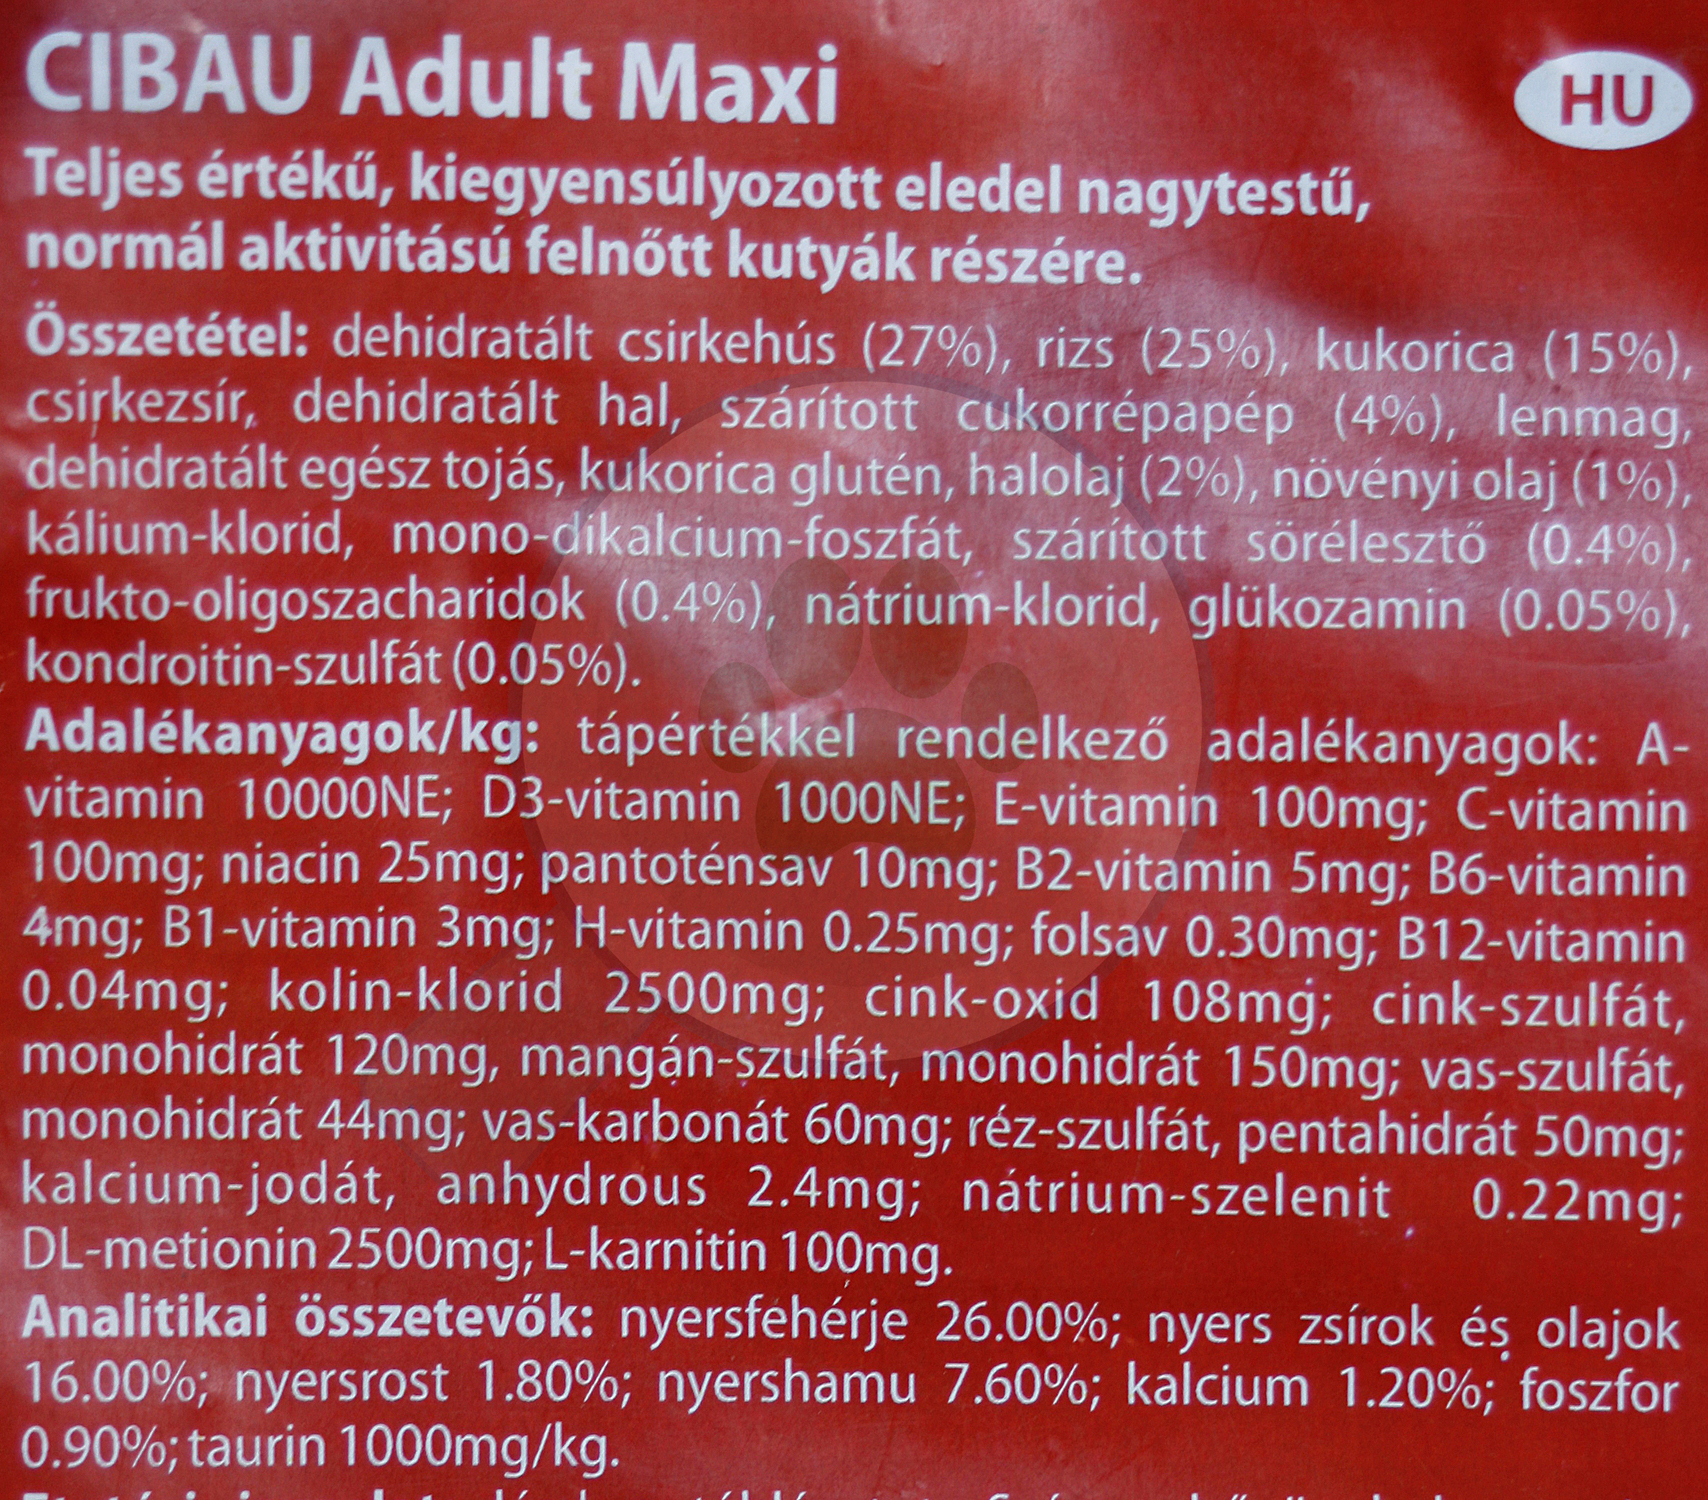 Cibau Adult Maxi - zoom